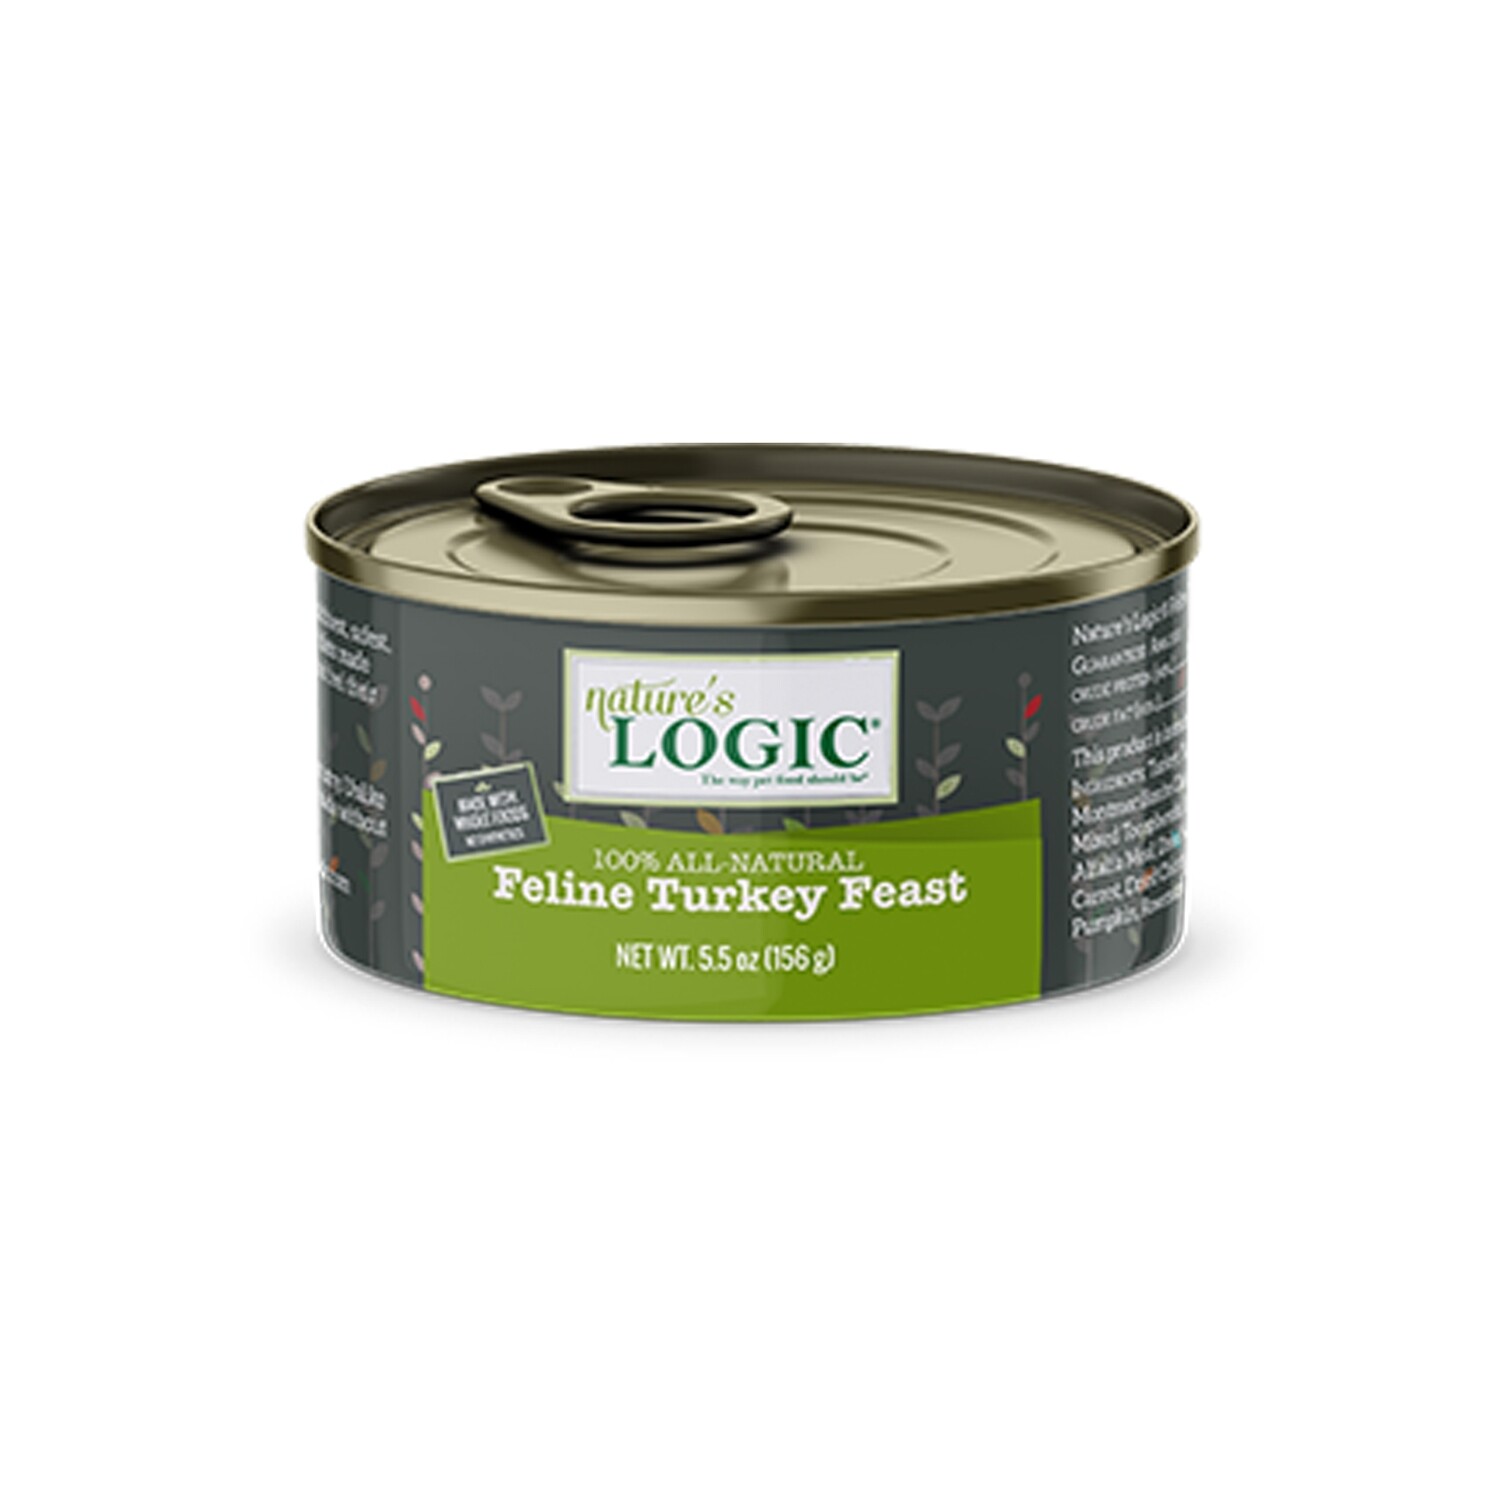 NATURE'S LOGIC - Feline Turkey Feast Cat Can Food-5.5oz 猫咪火鸡罐头